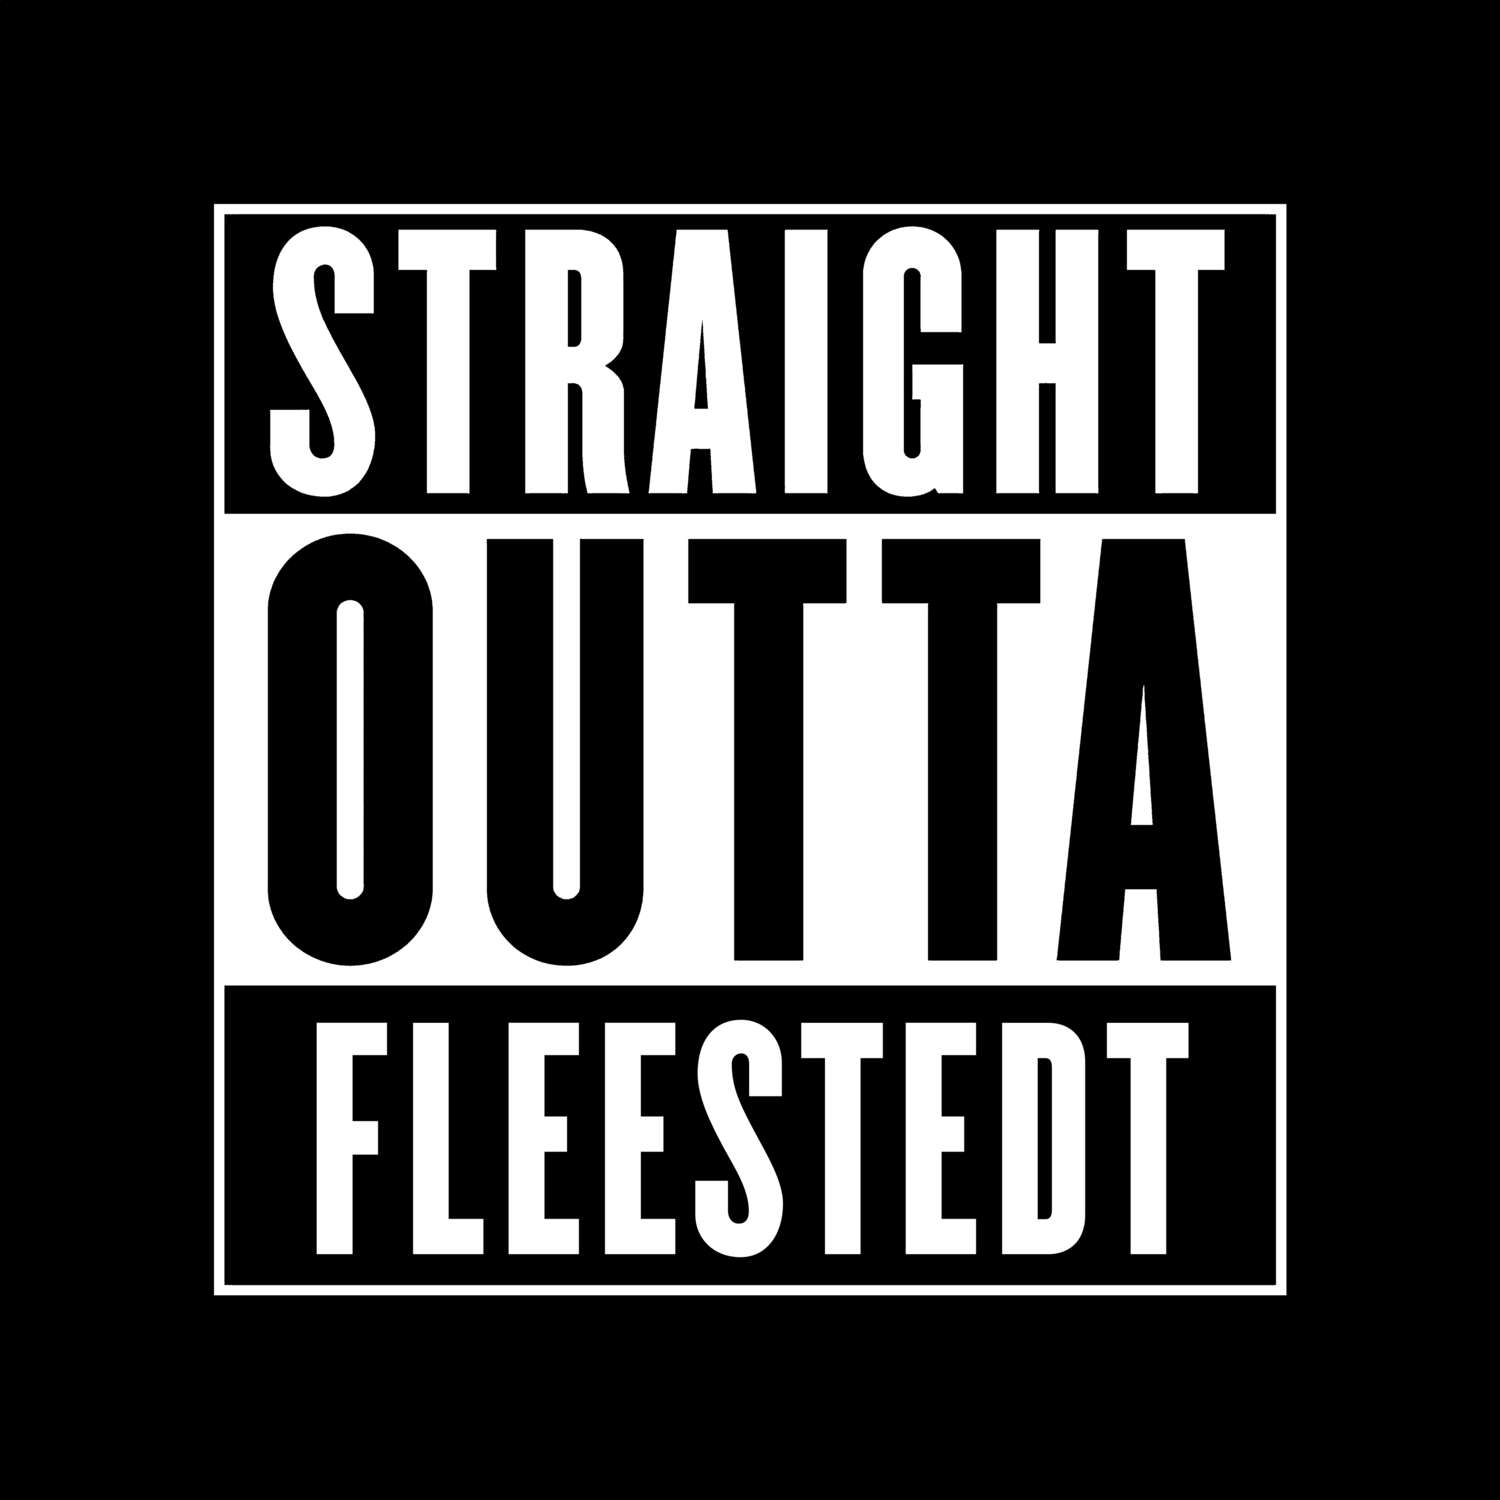 Fleestedt T-Shirt »Straight Outta«